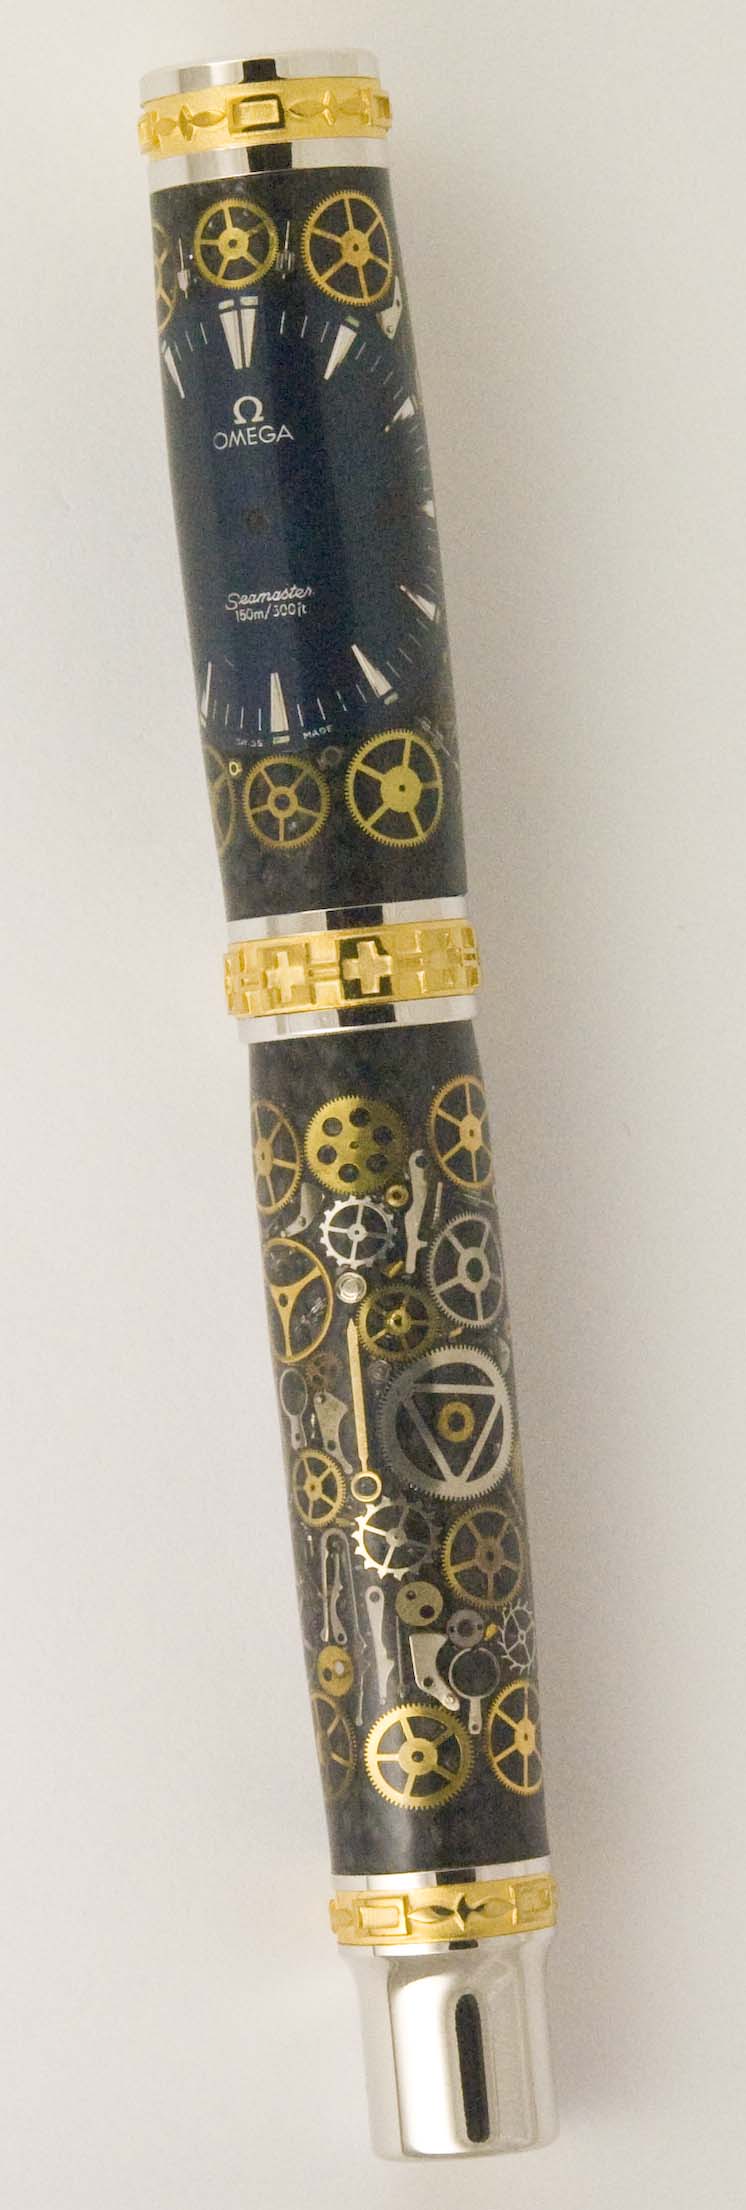 Omega Emperor Watch Pen